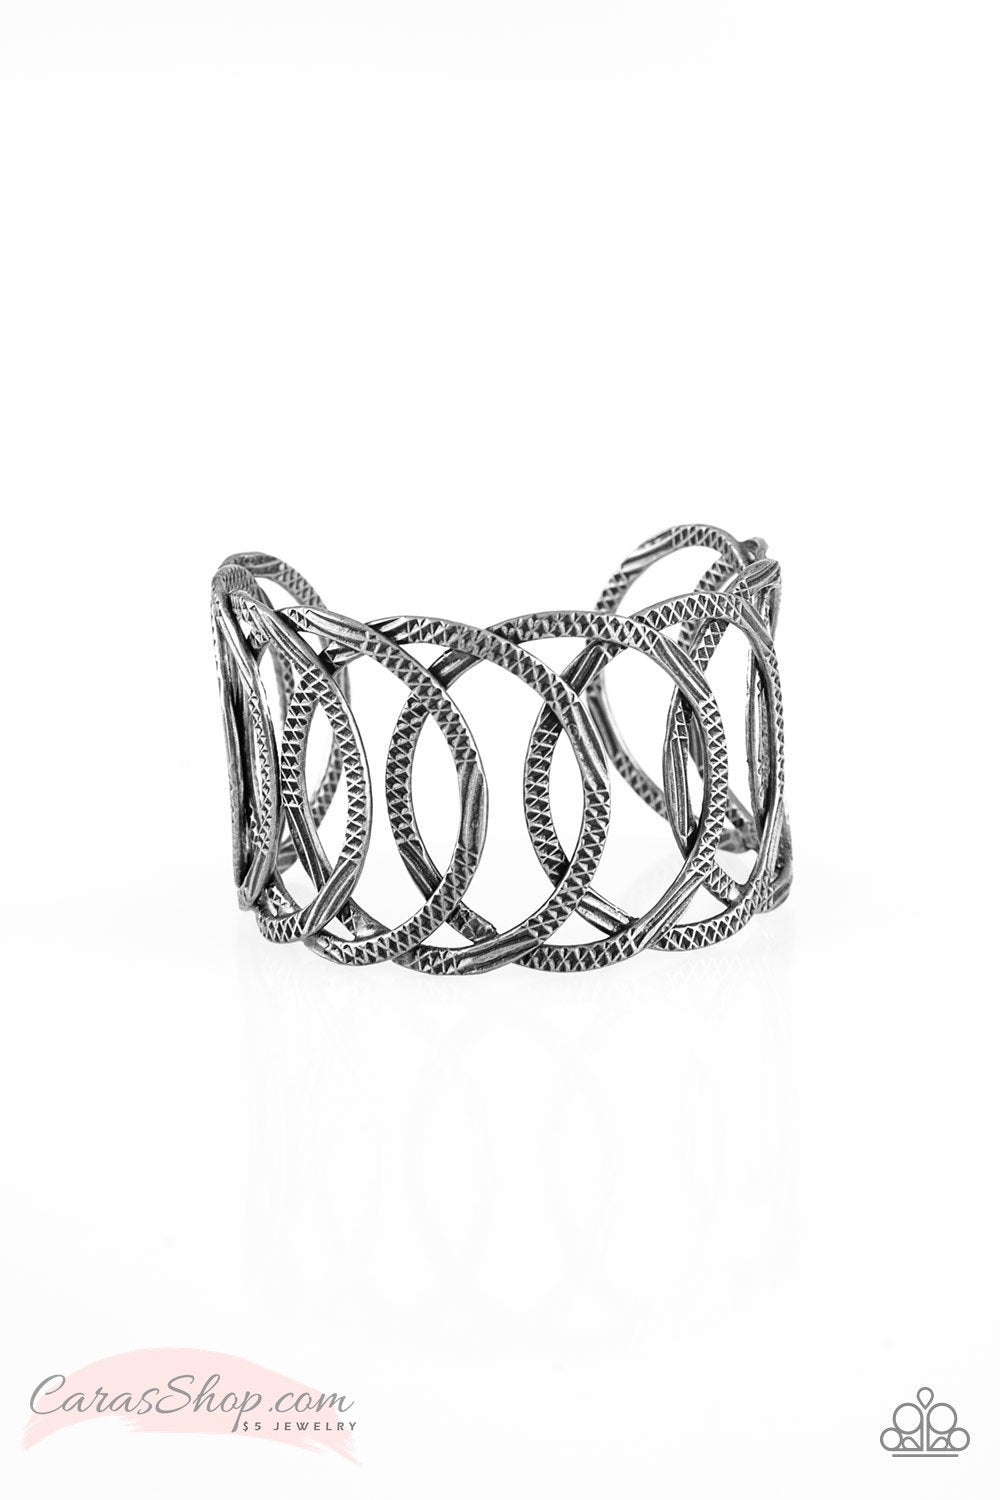 Circa de Contender Gunmetal Cuff Bracelet - Paparazzi Accessories-CarasShop.com - $5 Jewelry by Cara Jewels